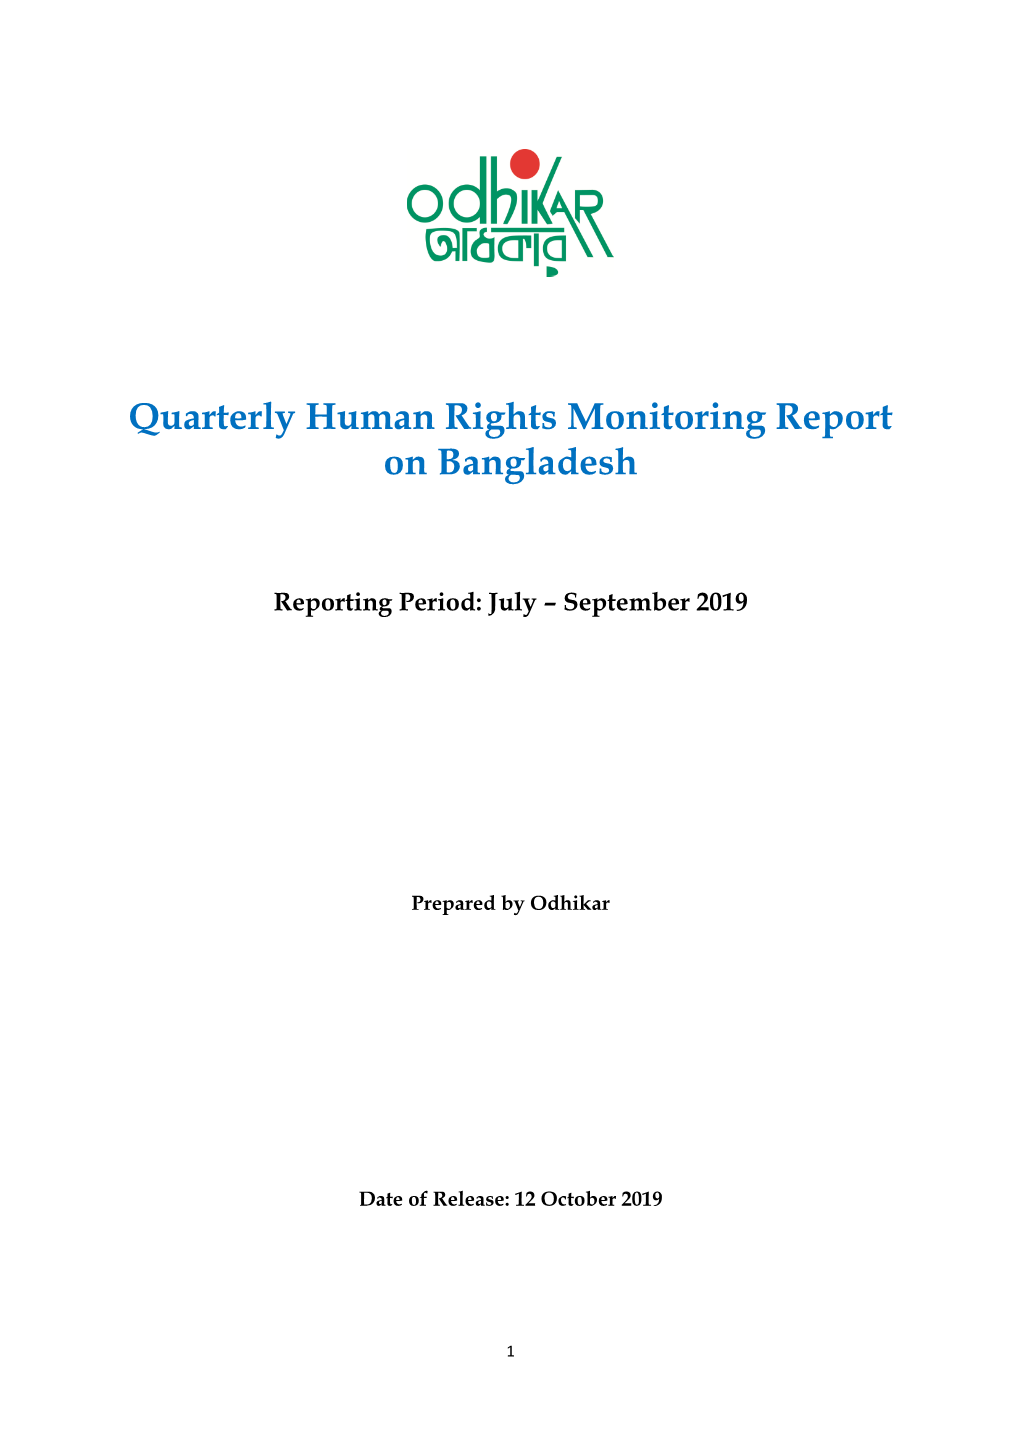 Quarterly Human Rights Monitoring Report on Bangladesh